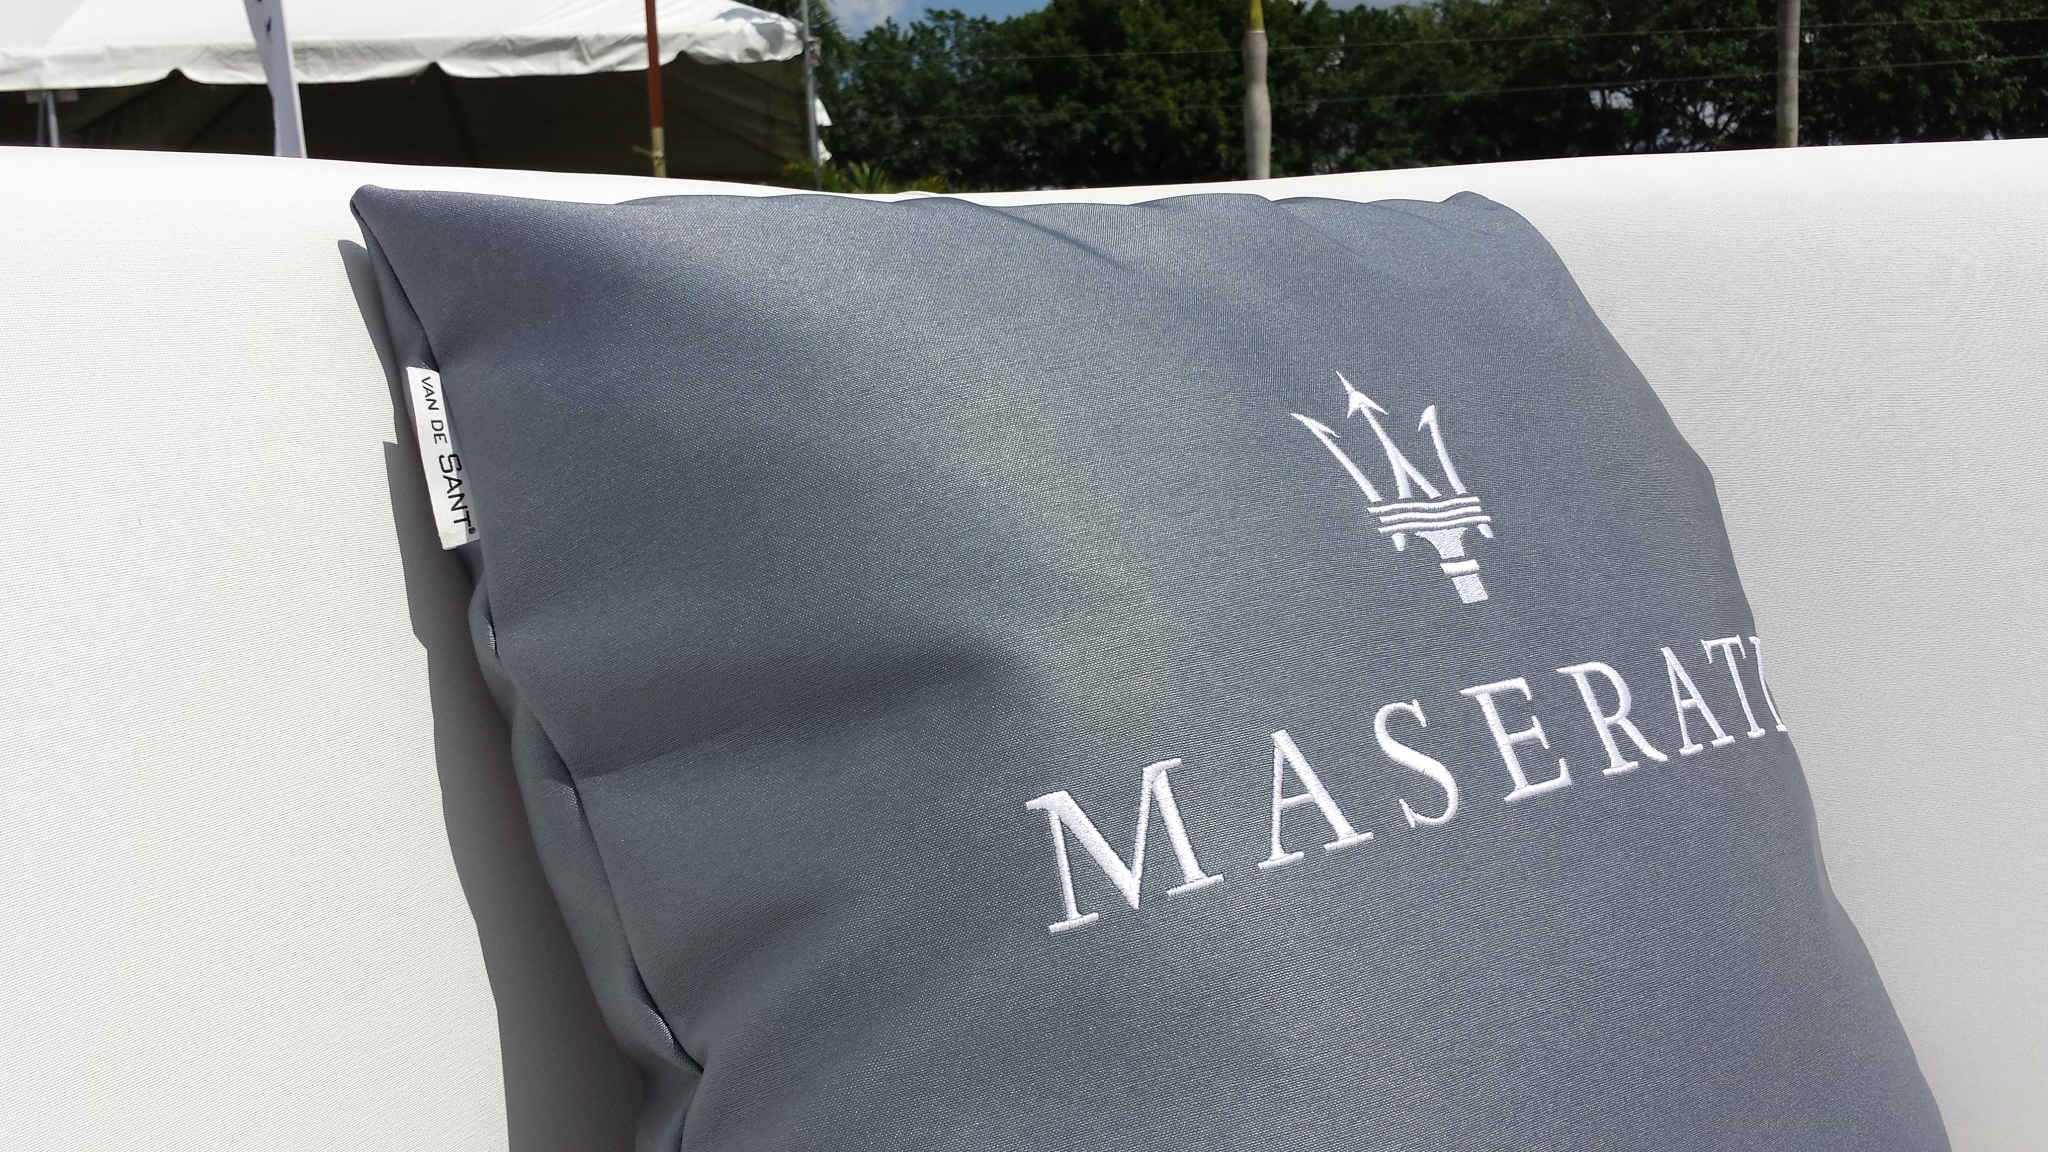 Maserati U.S. Open Polo Championships 2014 